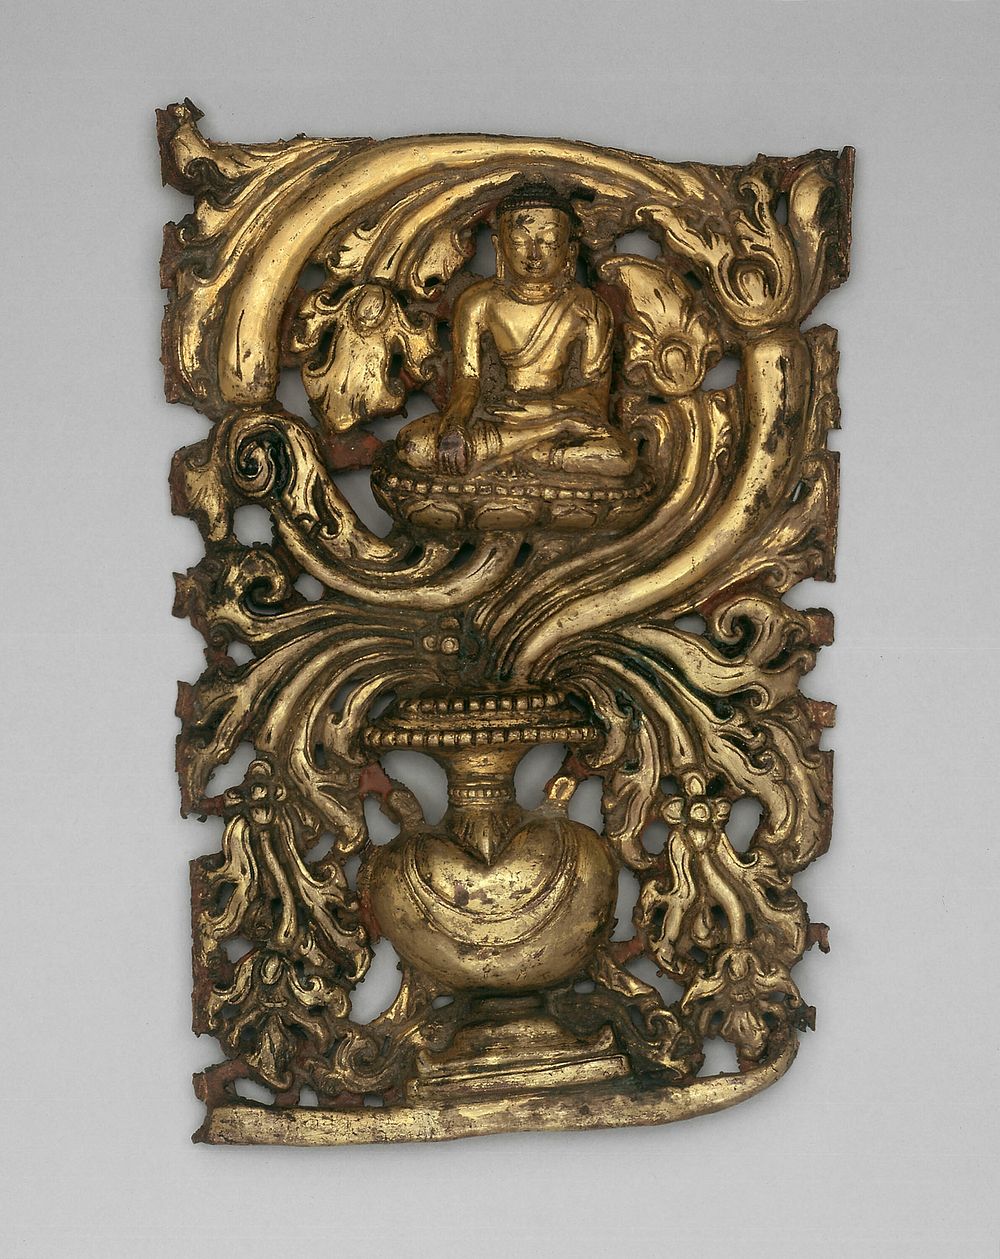 Transcendent Buddha Akshobhya and Vessel Overflowing with Foliage (Purnagata)